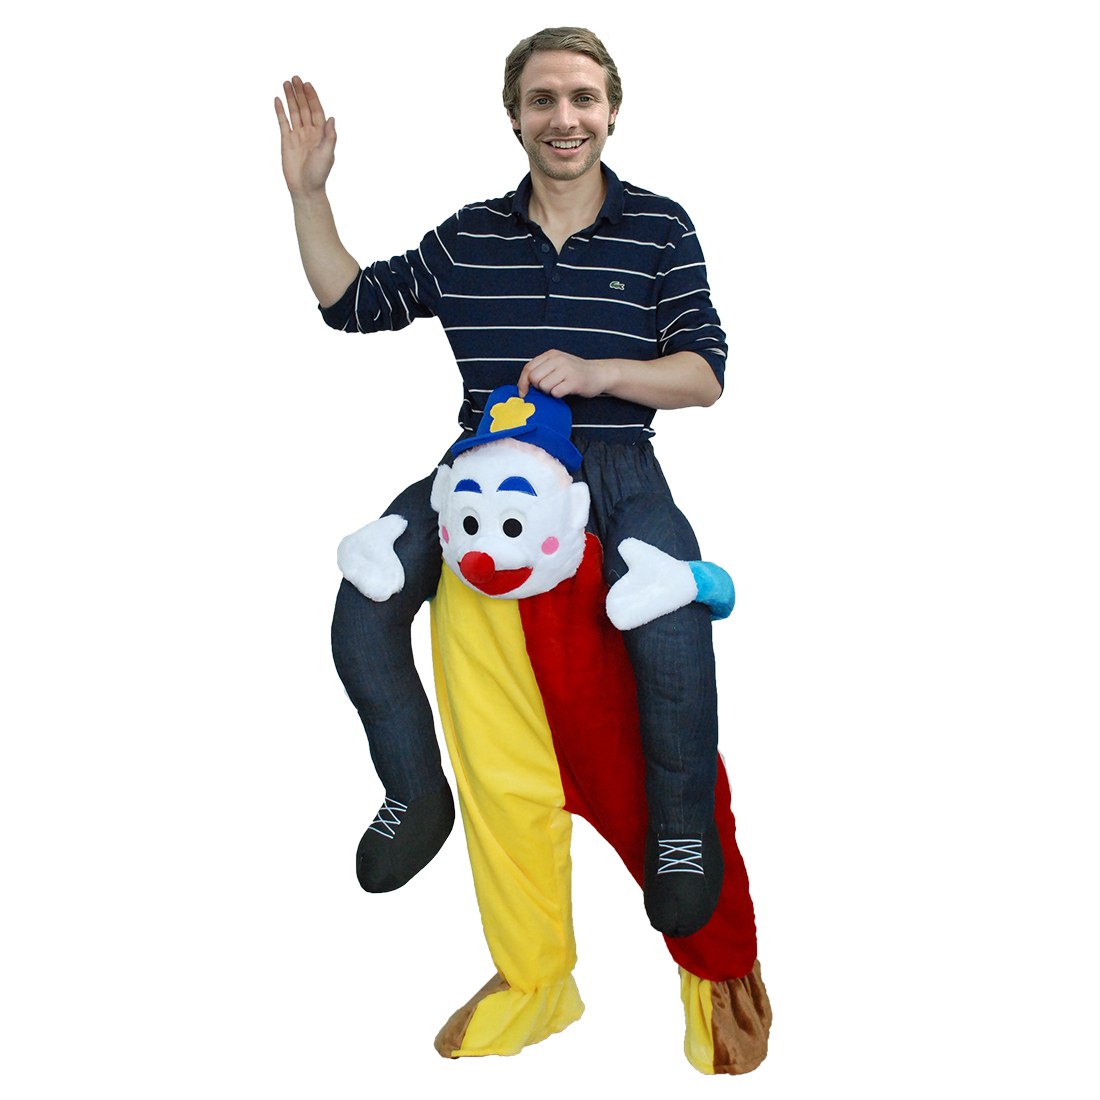 Volwassen Op de rug van Carry Me (Ride On) Kostuum Clown Mascot Broek Carnavalskleding Carnaval